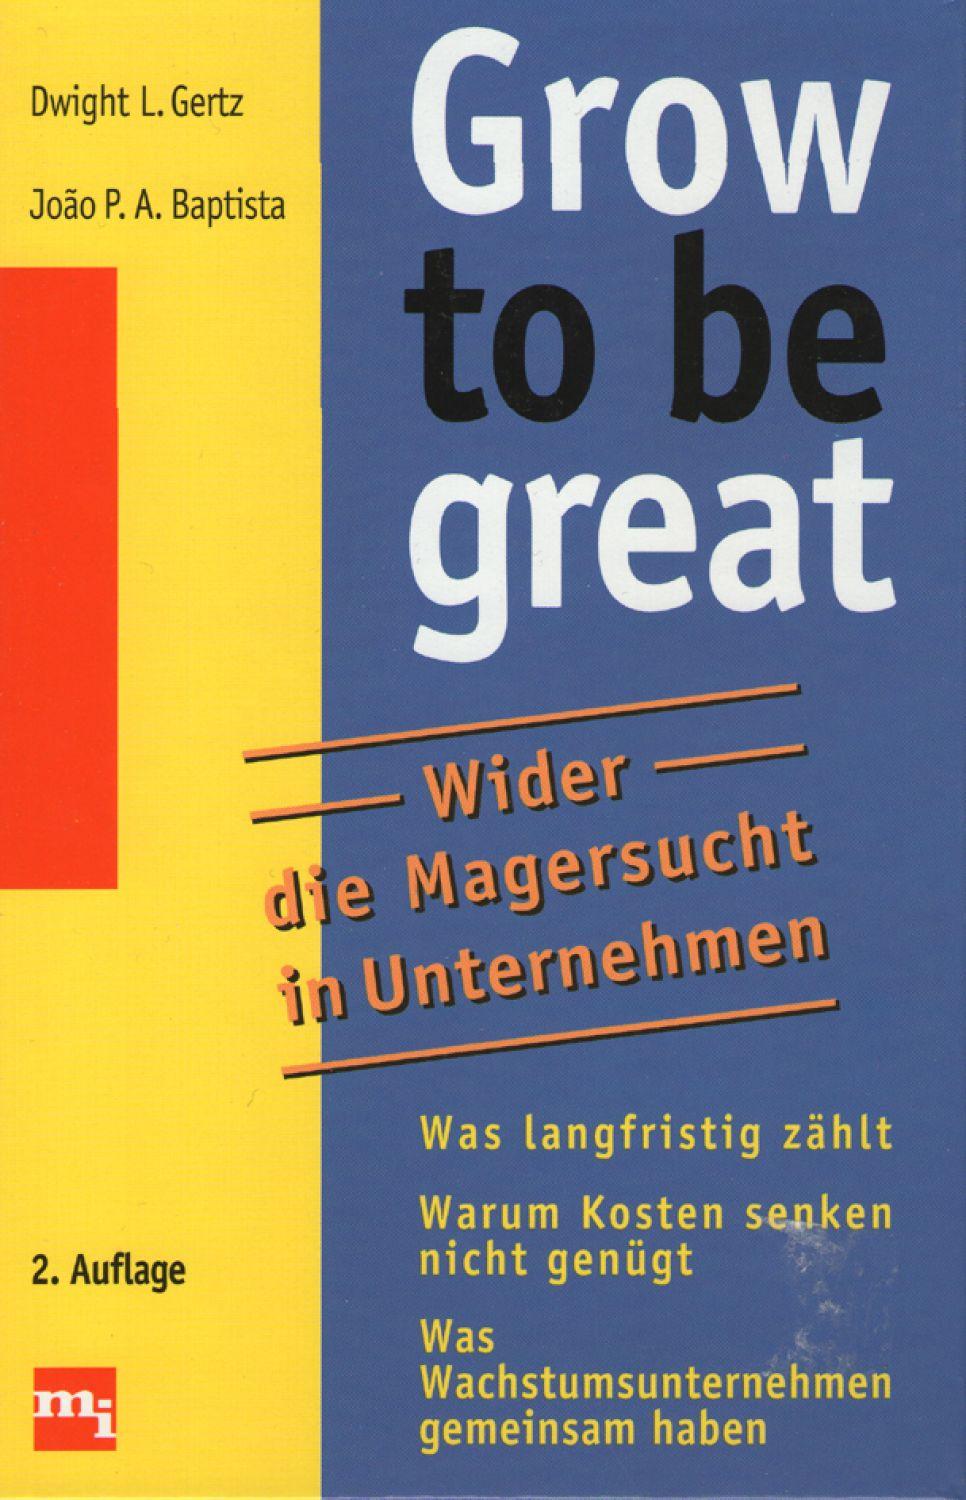 Grow to be great/ Wider die Magersucht in Unternehmen - Dwight L. Gertz, Joao P.A. Baptista